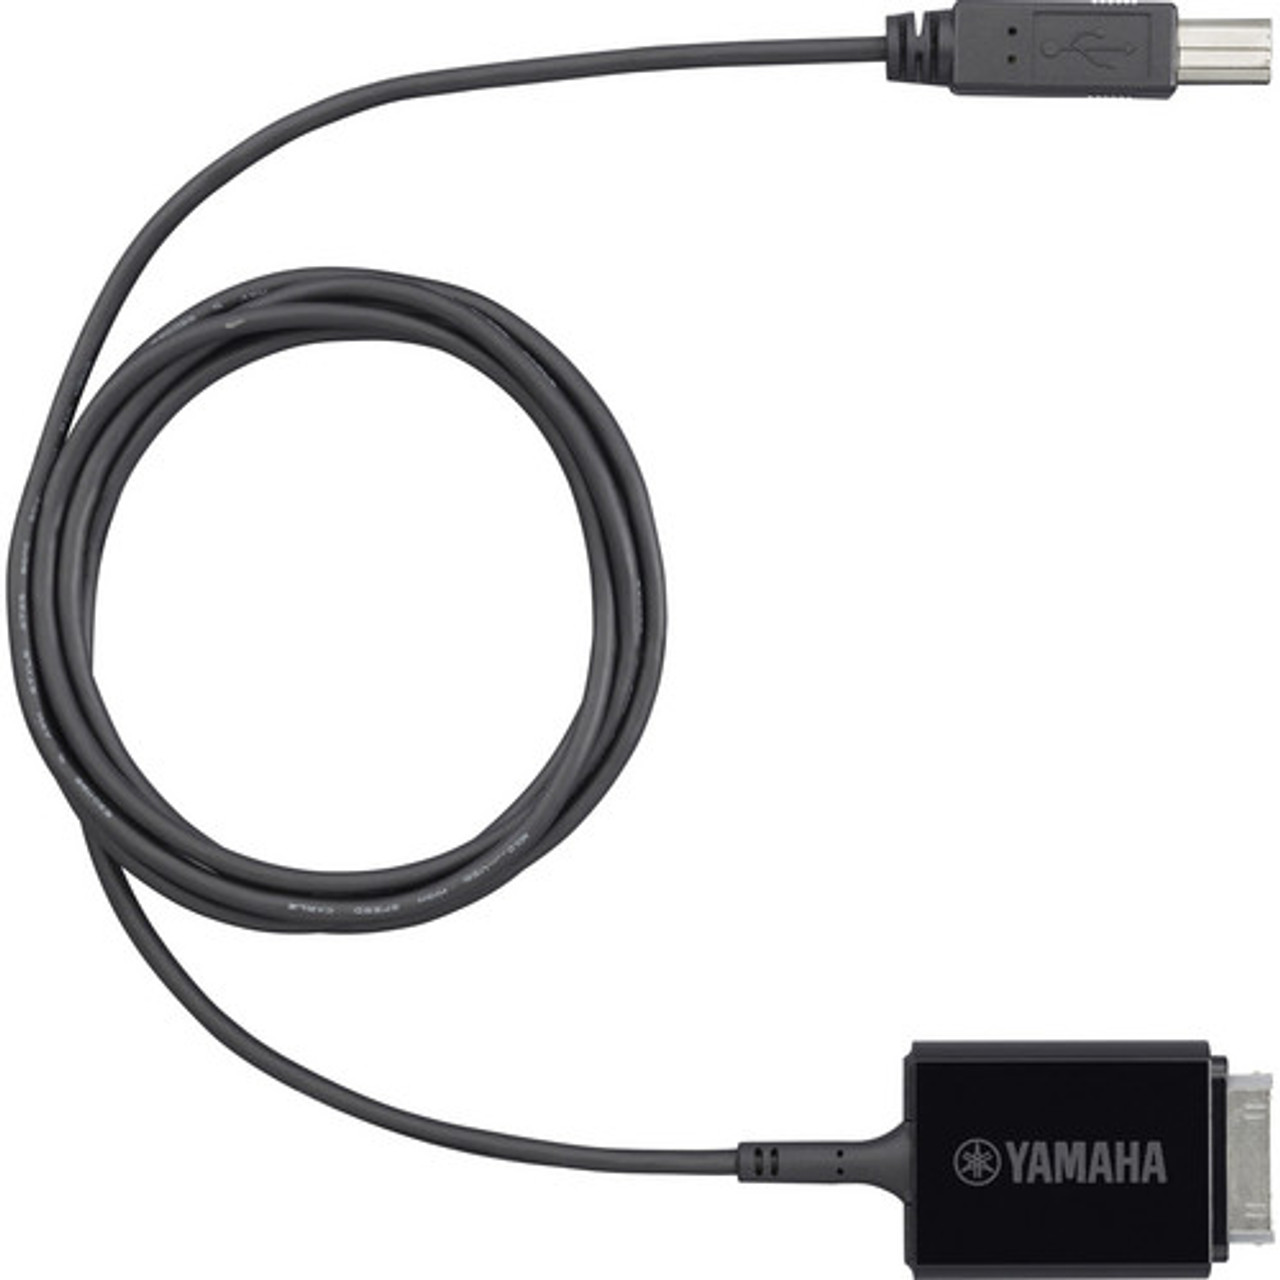 Yamaha 4.9' USB to Apple 30-Pin Interface